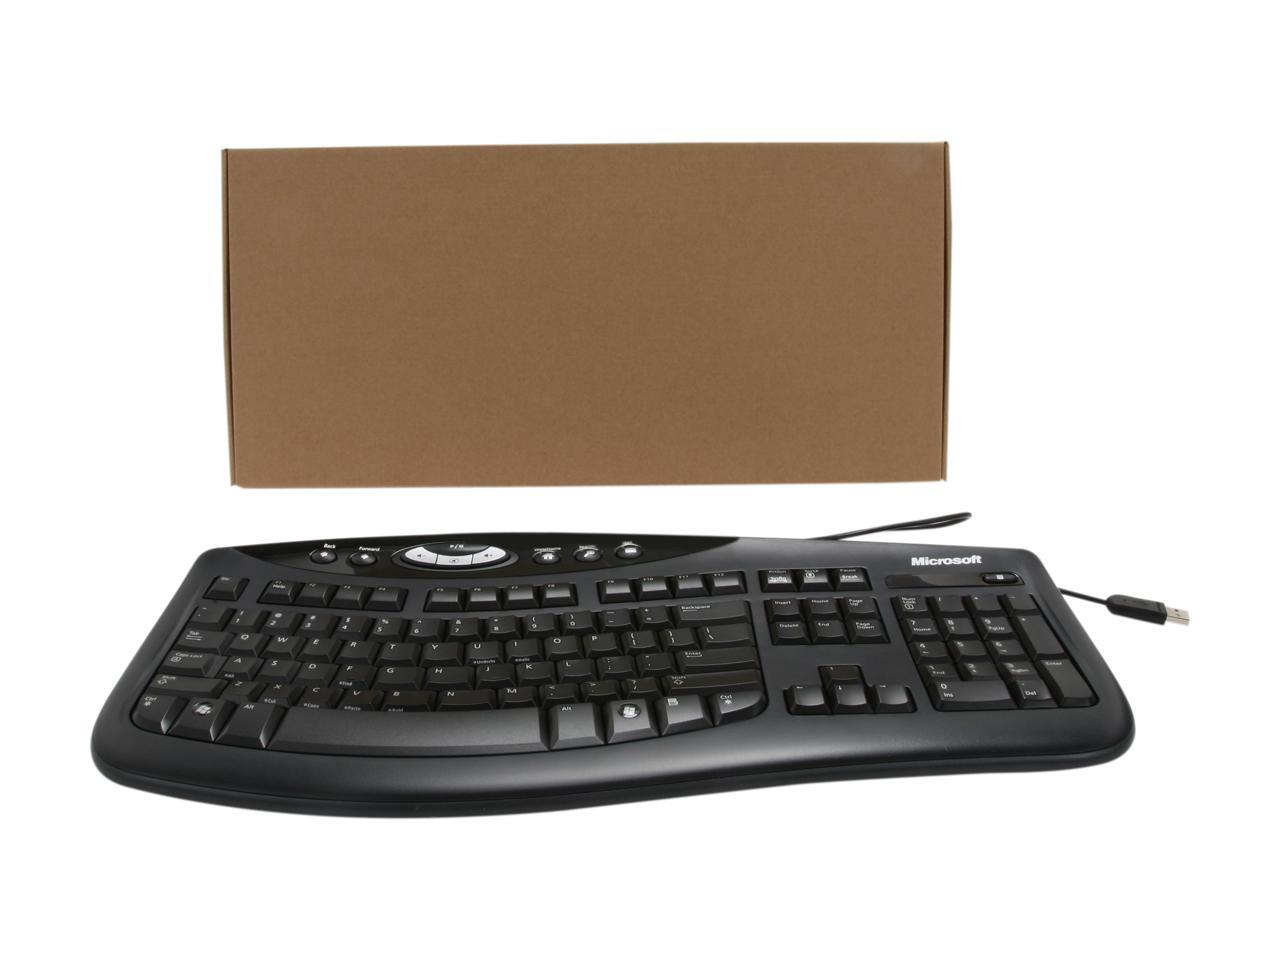 Microsoft Comfort Curve Keyboard 2000 7FH-00001 Black Wired Keyboard